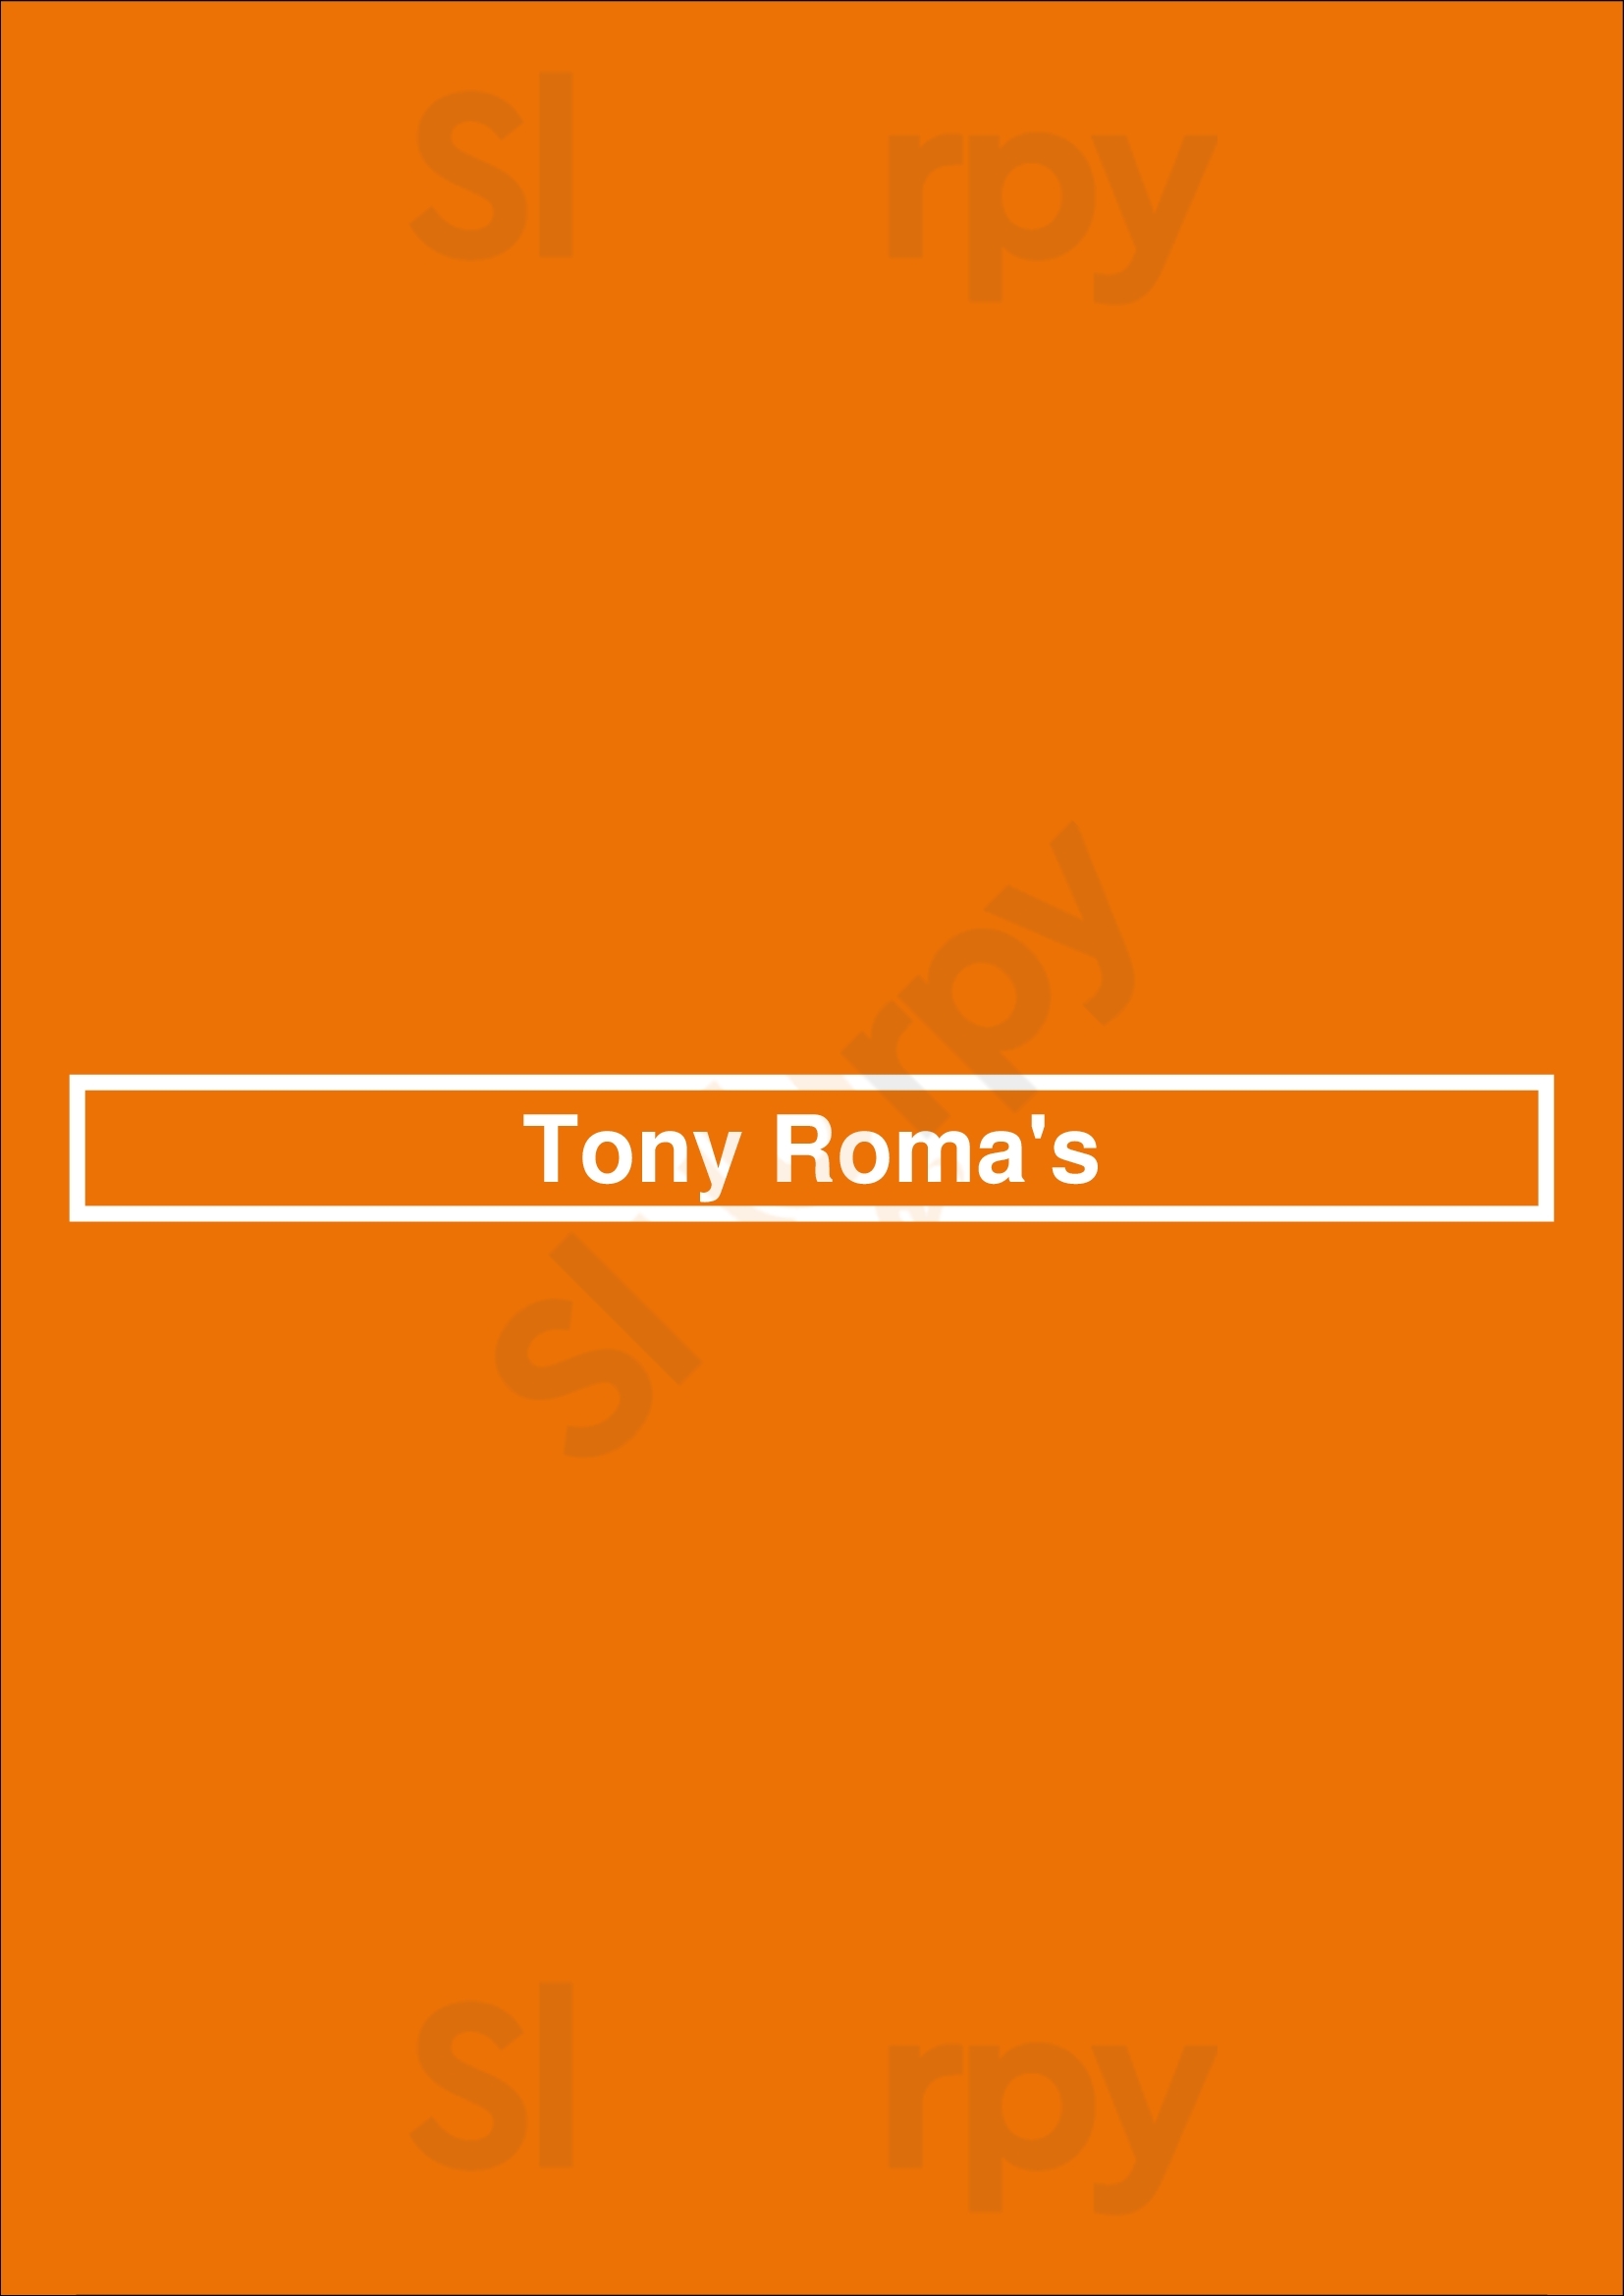 Tony Roma's London Menu - 1